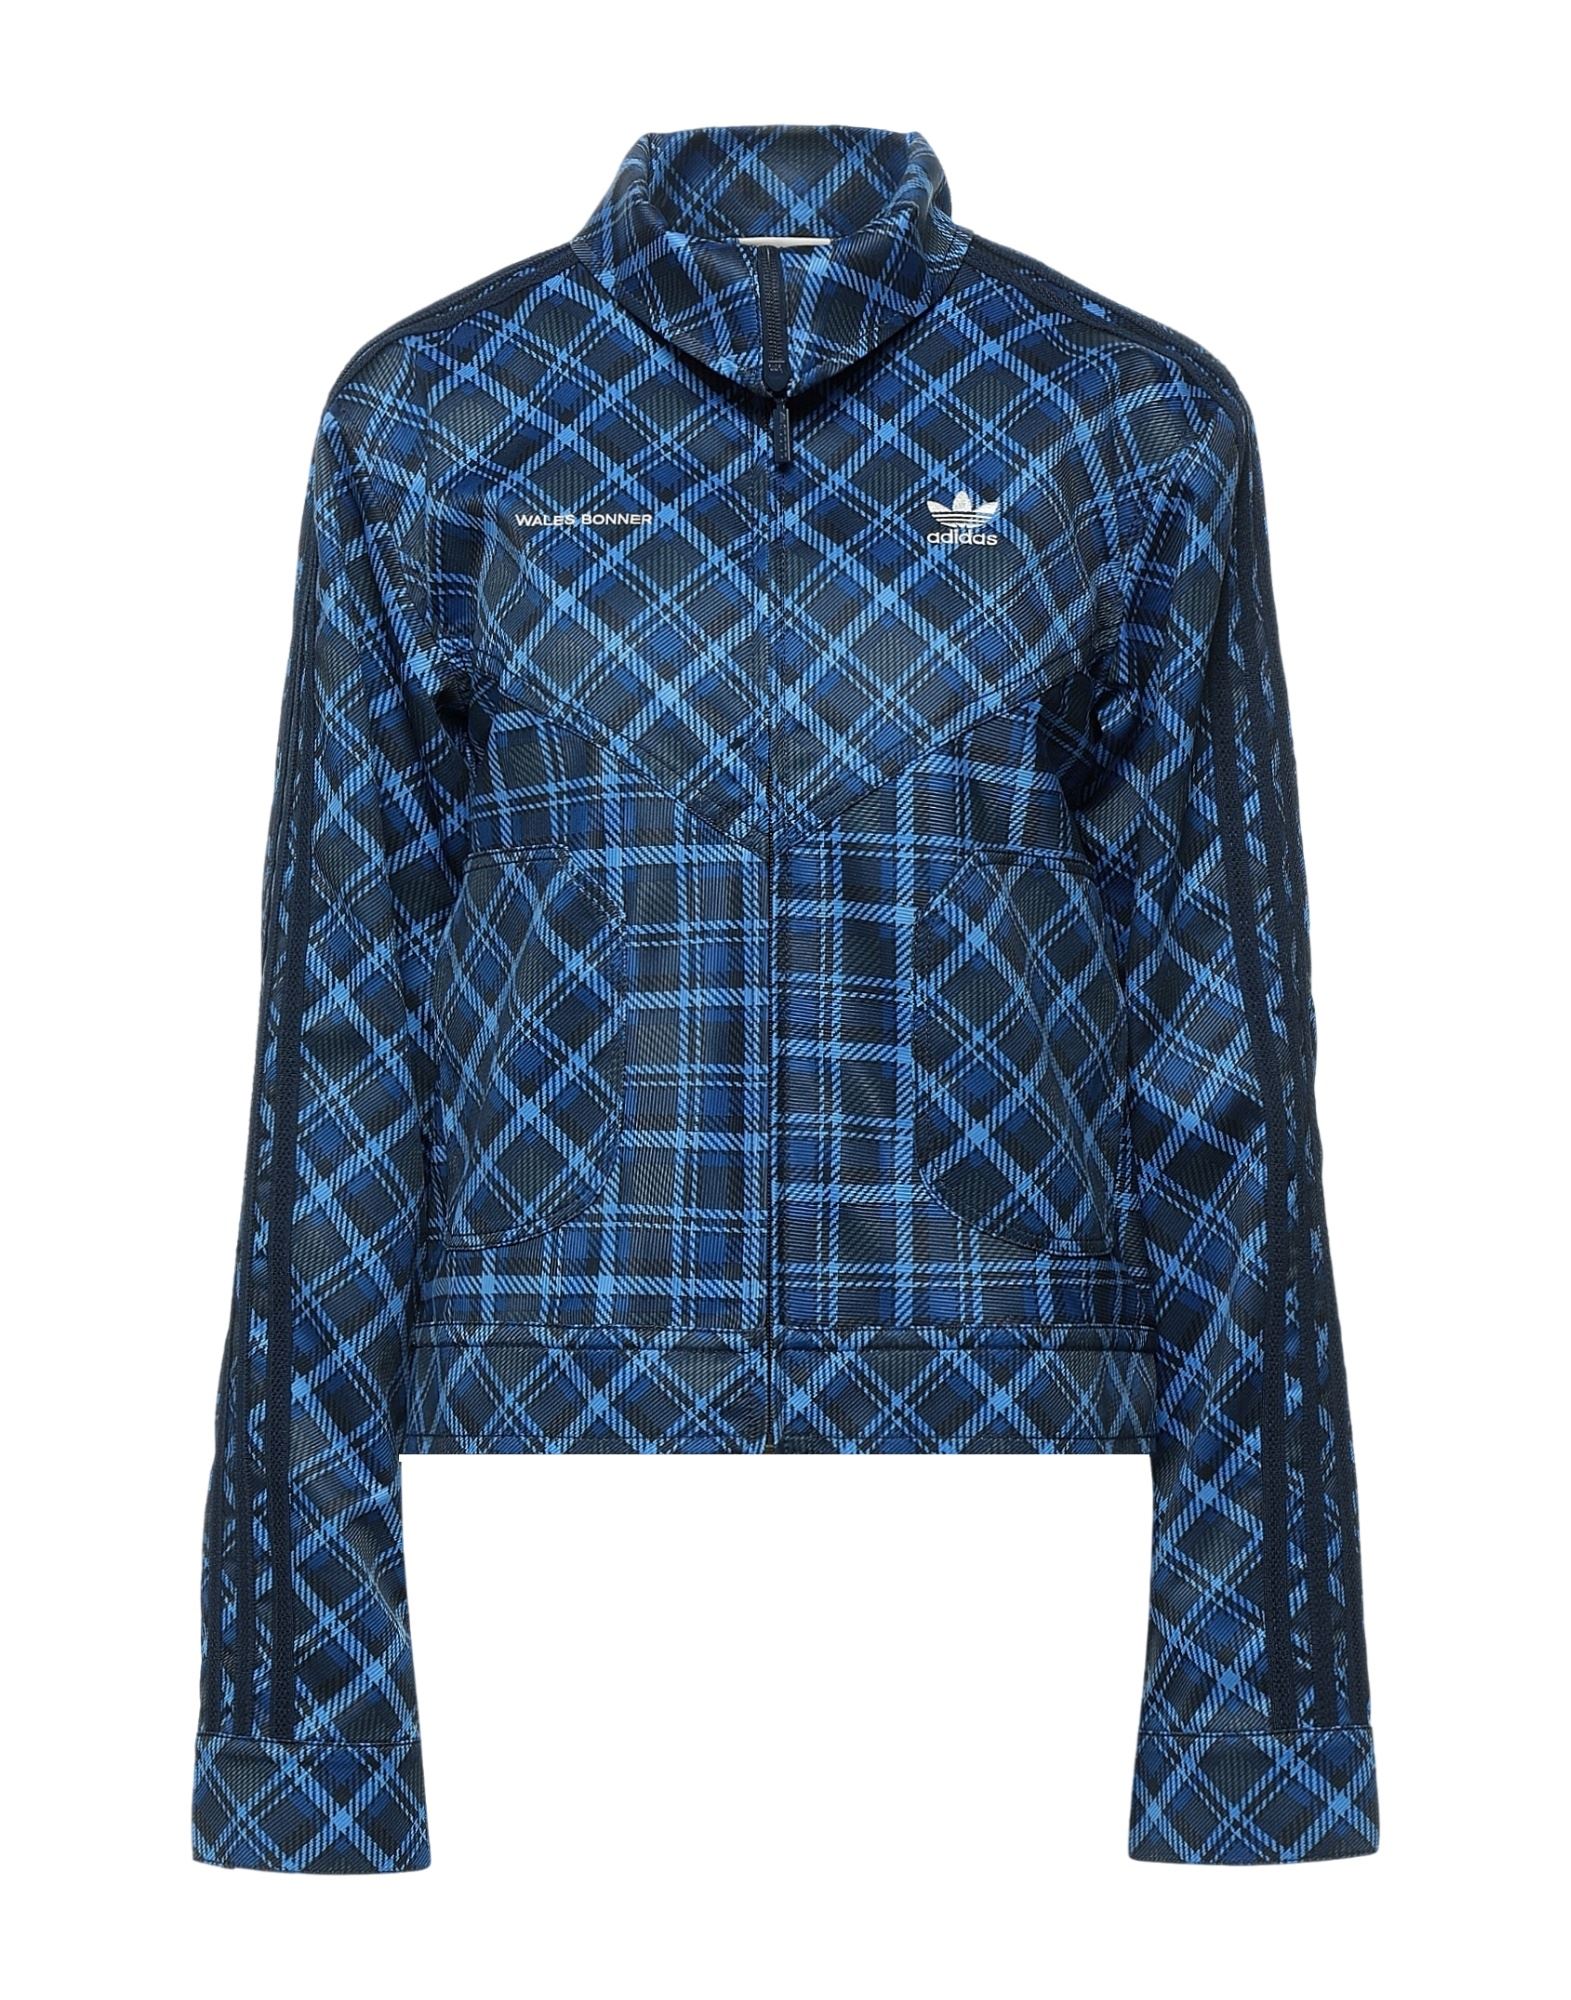 Adidas Originals By Wales Bonner Sweatshirts In Blue